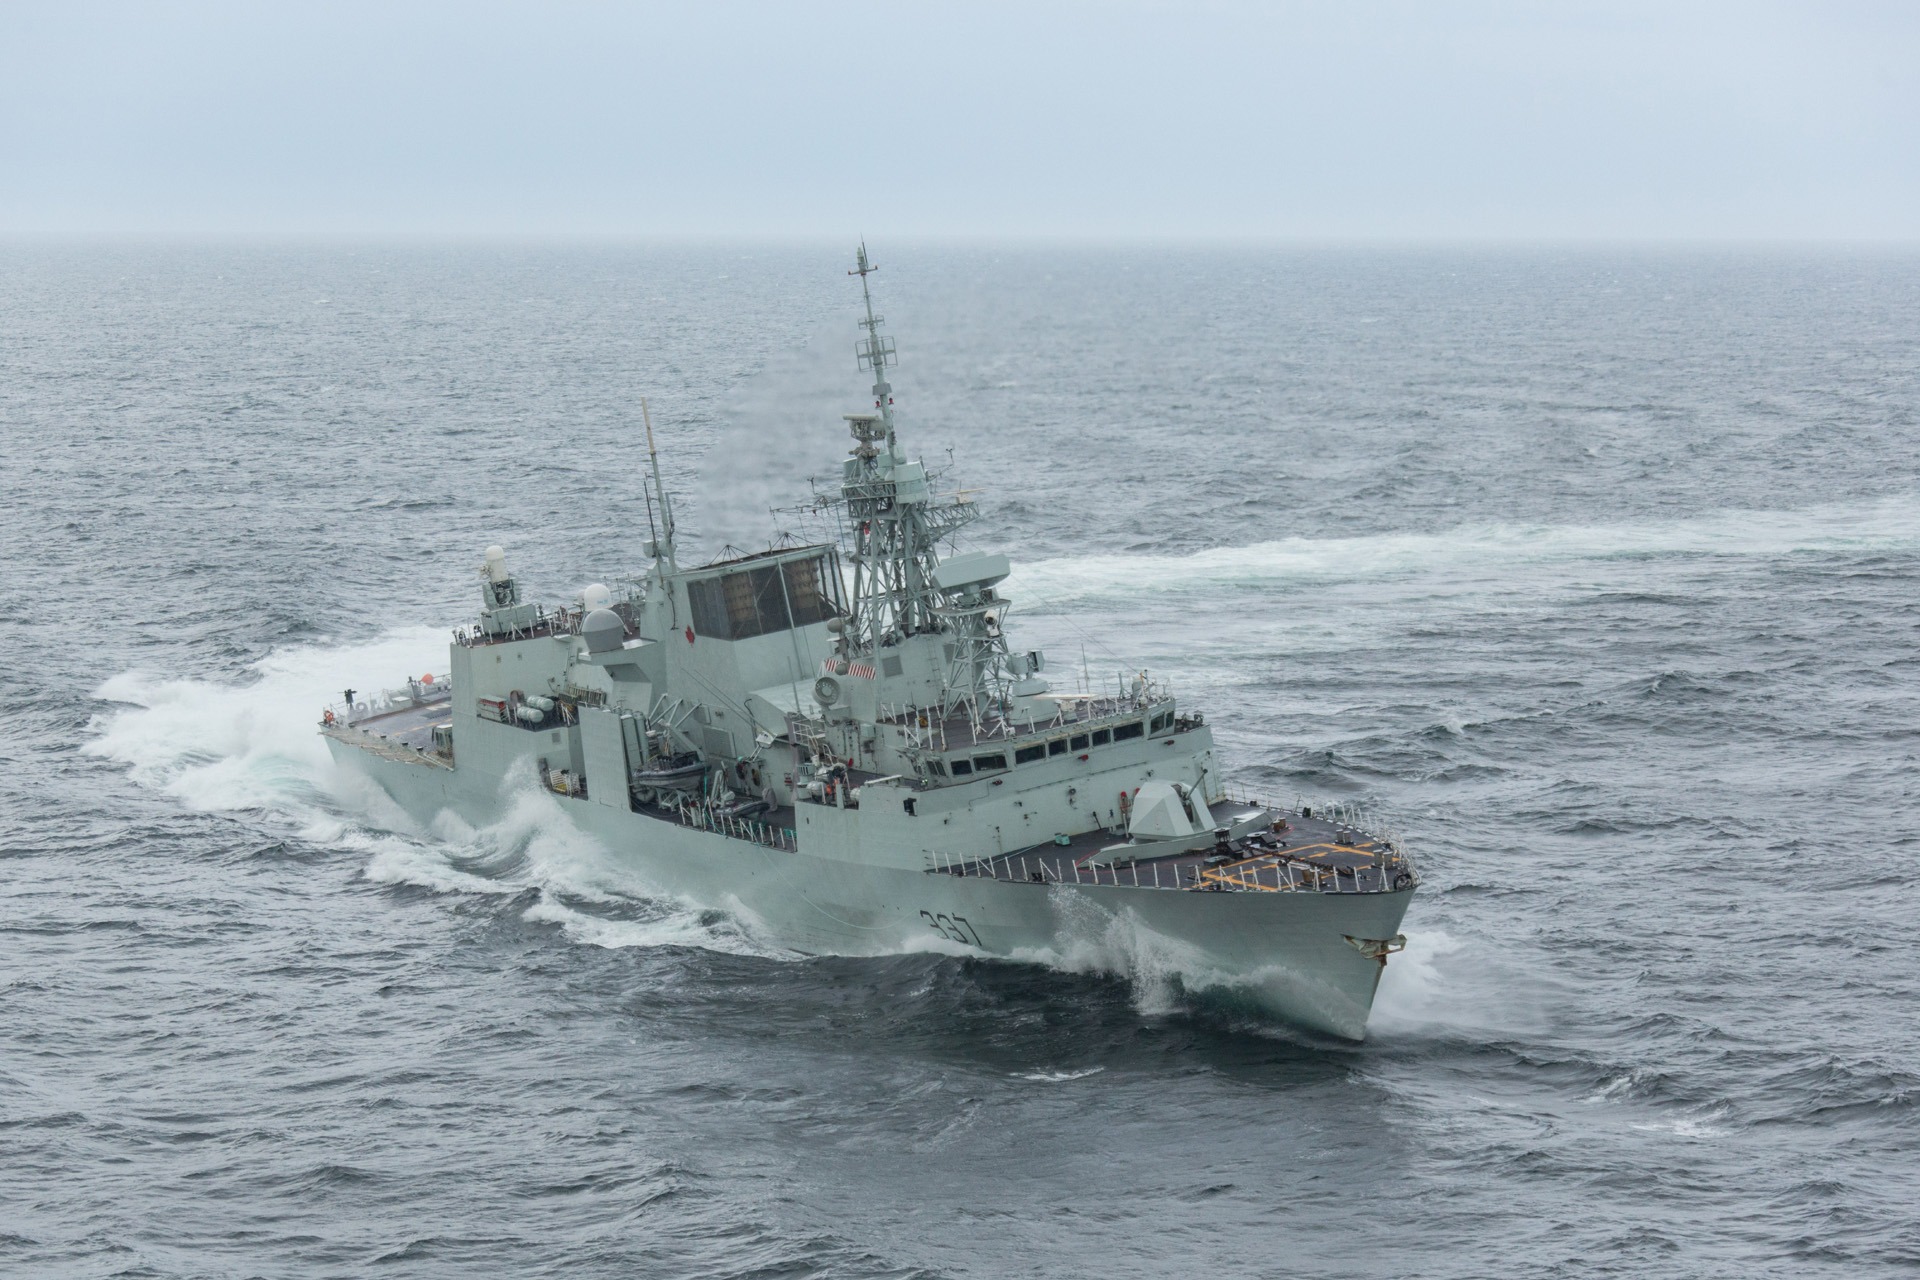 Halifax-class multi-role patrol frigate HMCS Fredericton